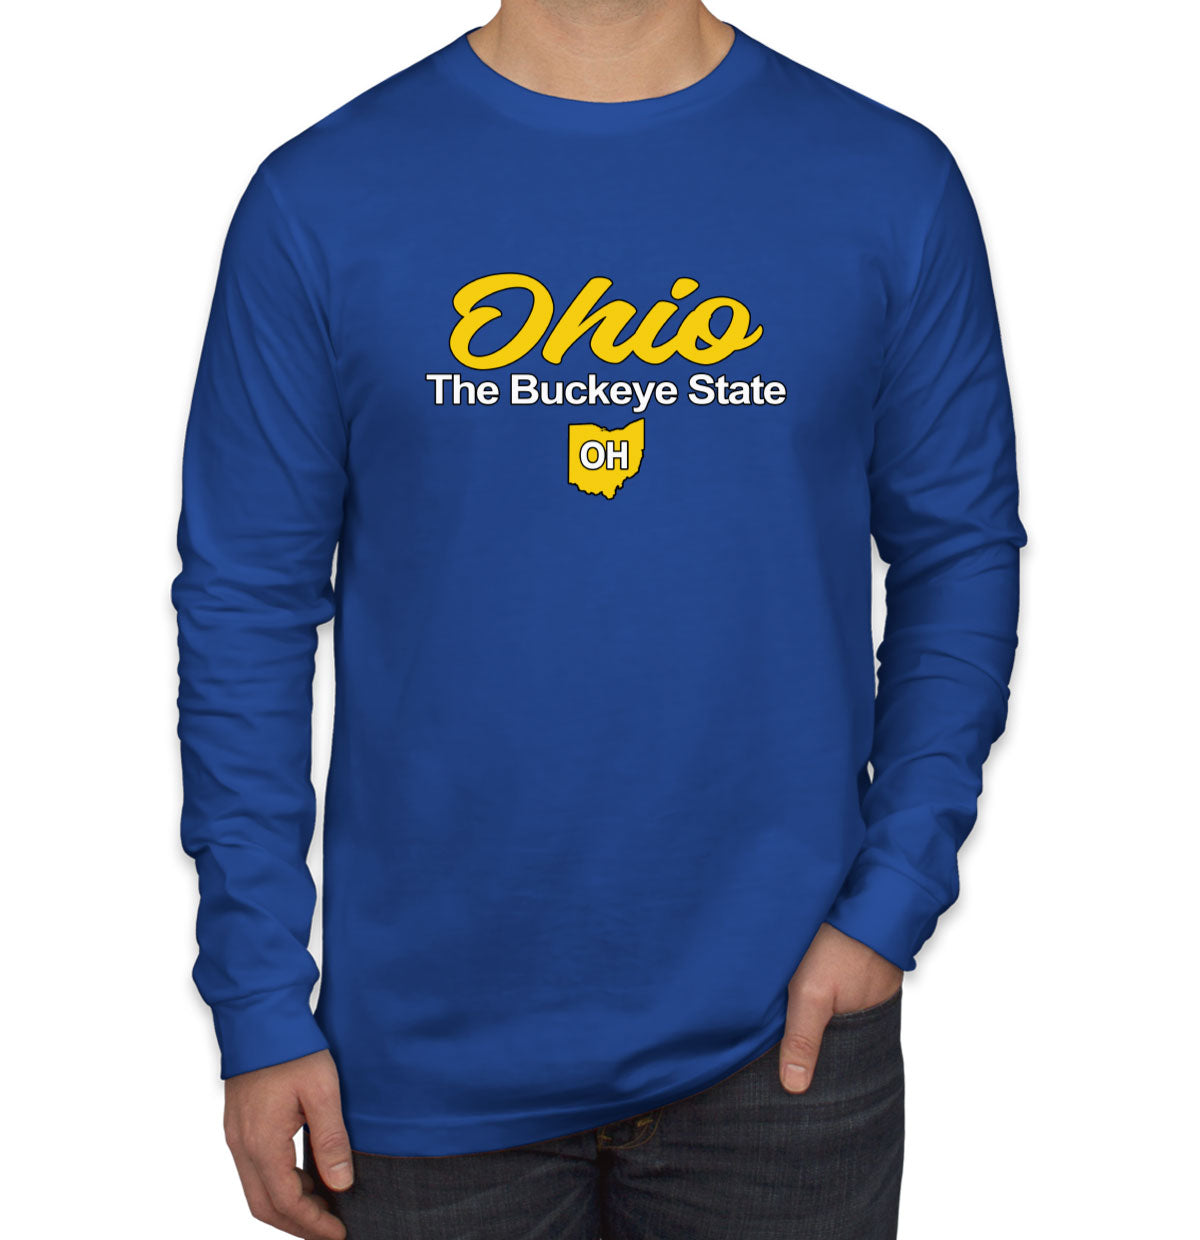 Ohio The Buckeye State Men's Long Sleeve Shirt